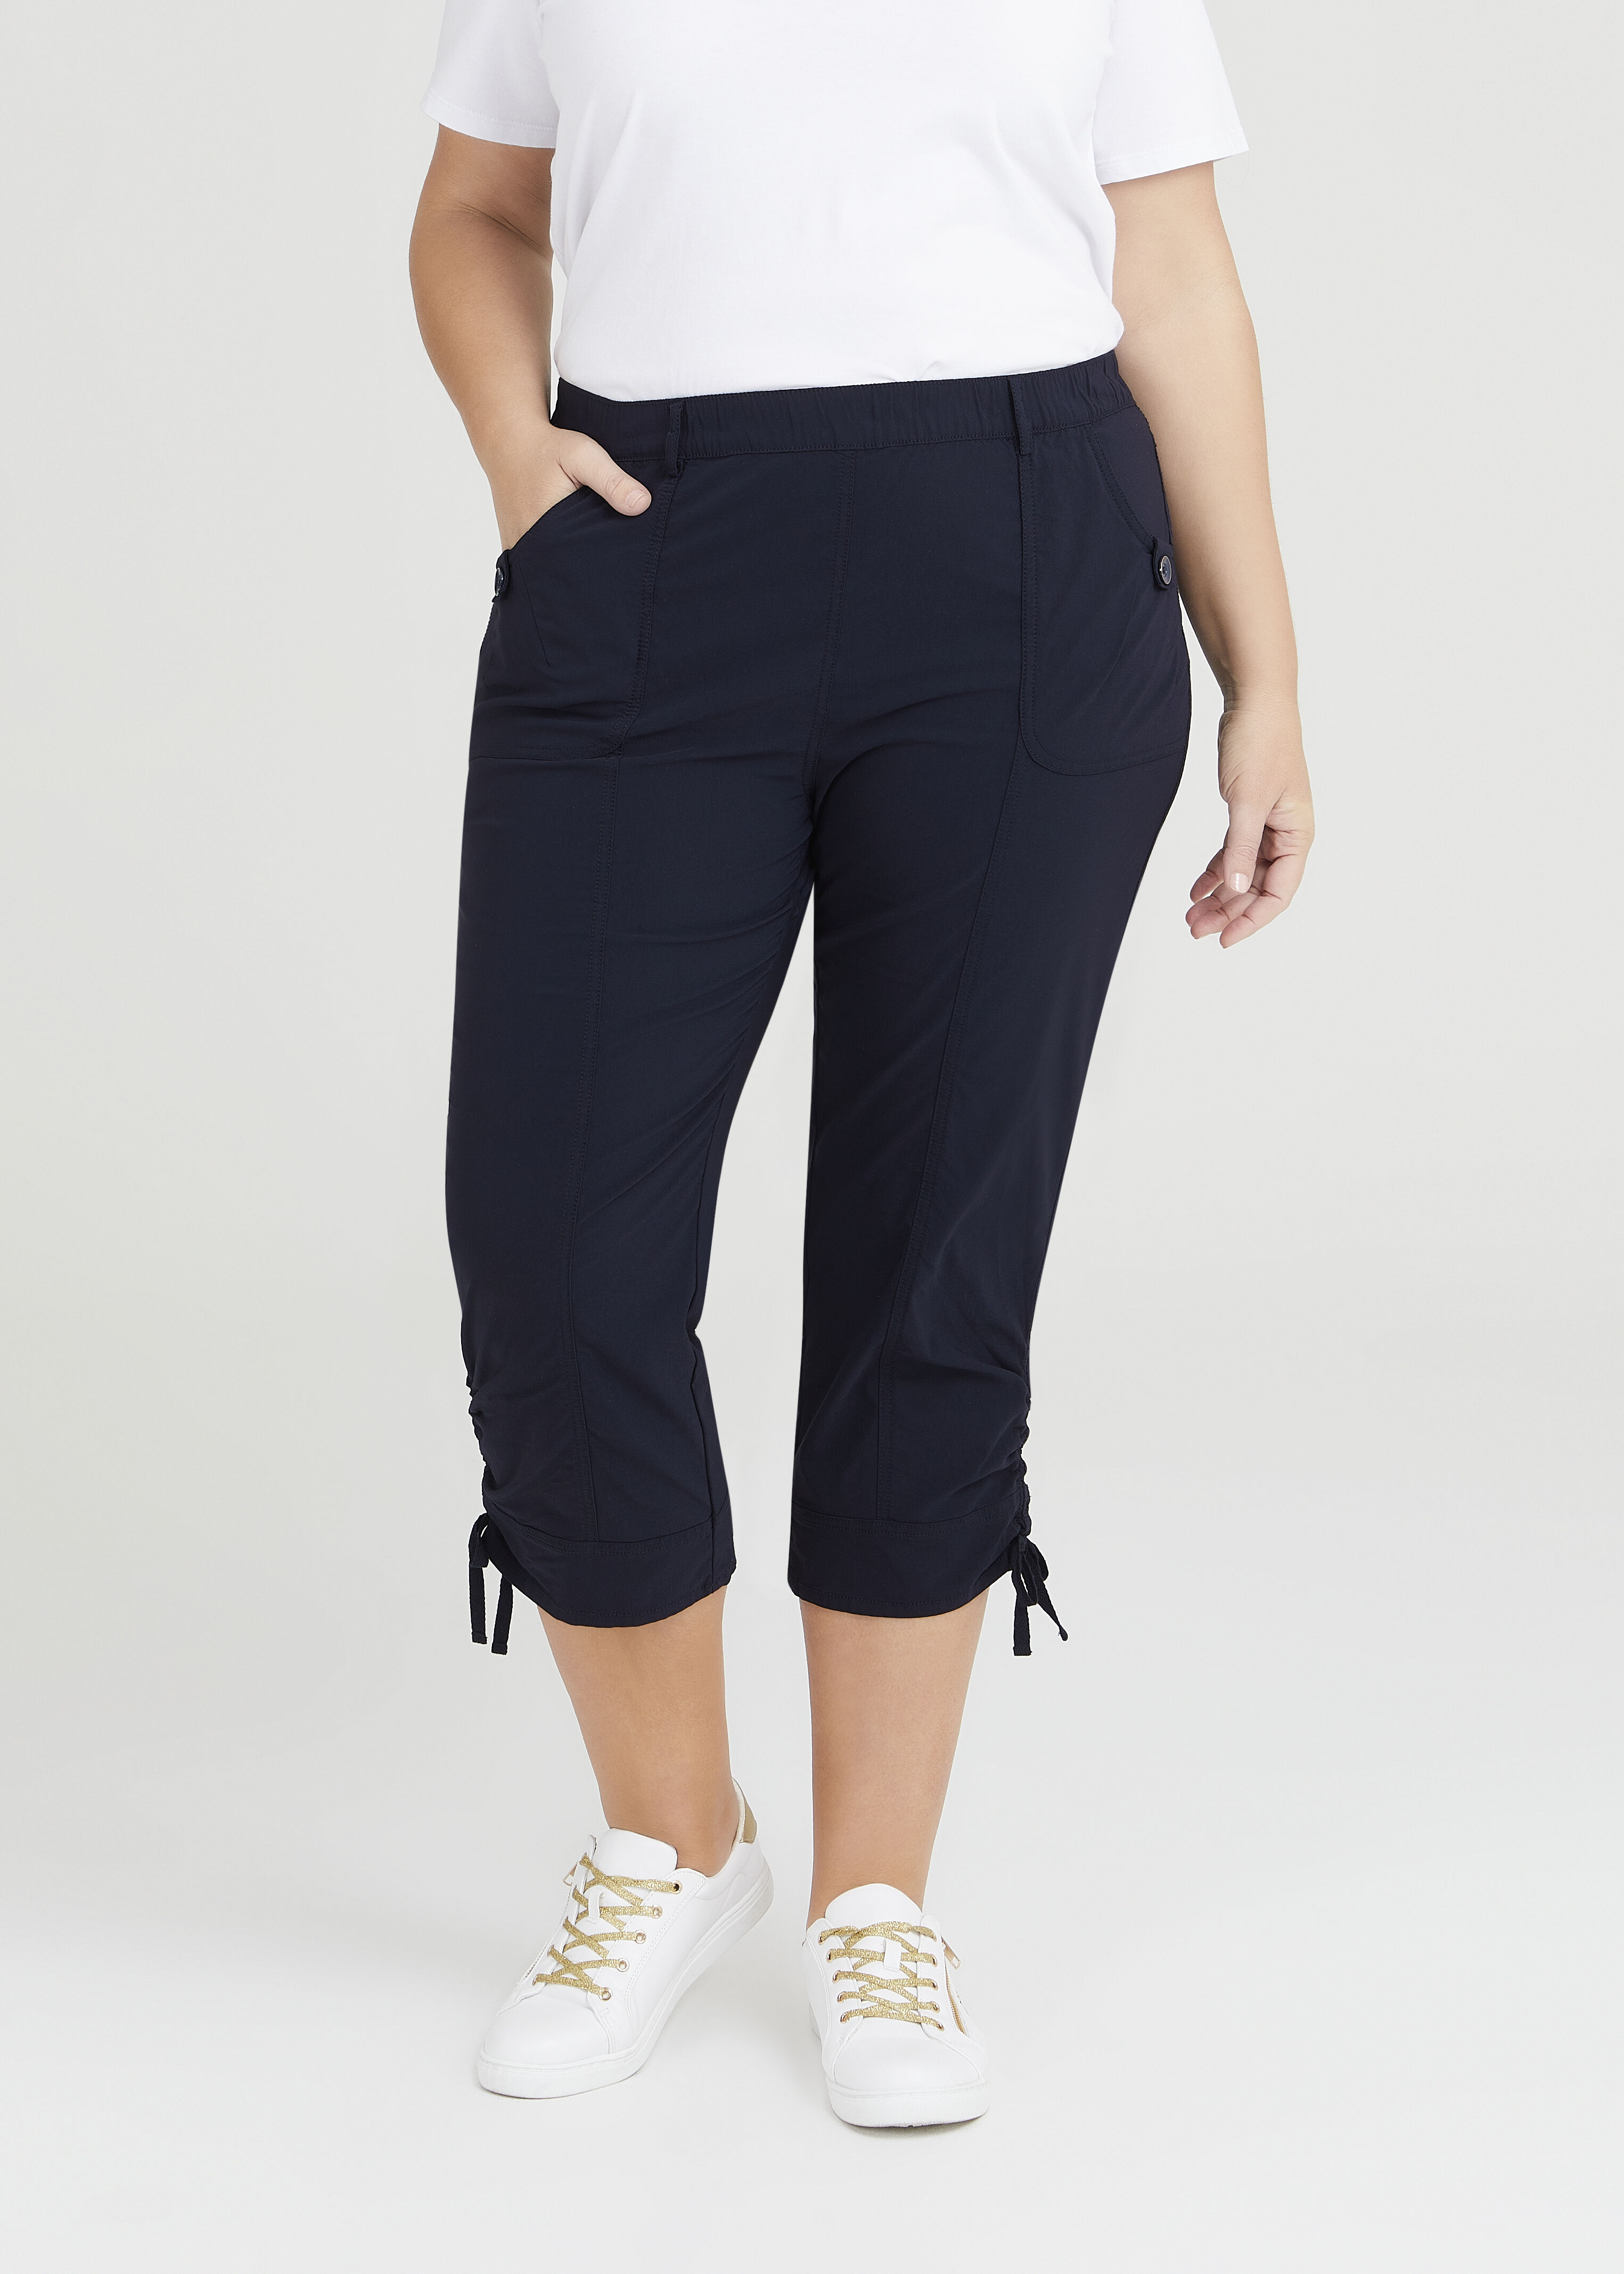 Skratta Svea 3/4 Pant - Shorts Women's | Buy online | Alpinetrek.co.uk